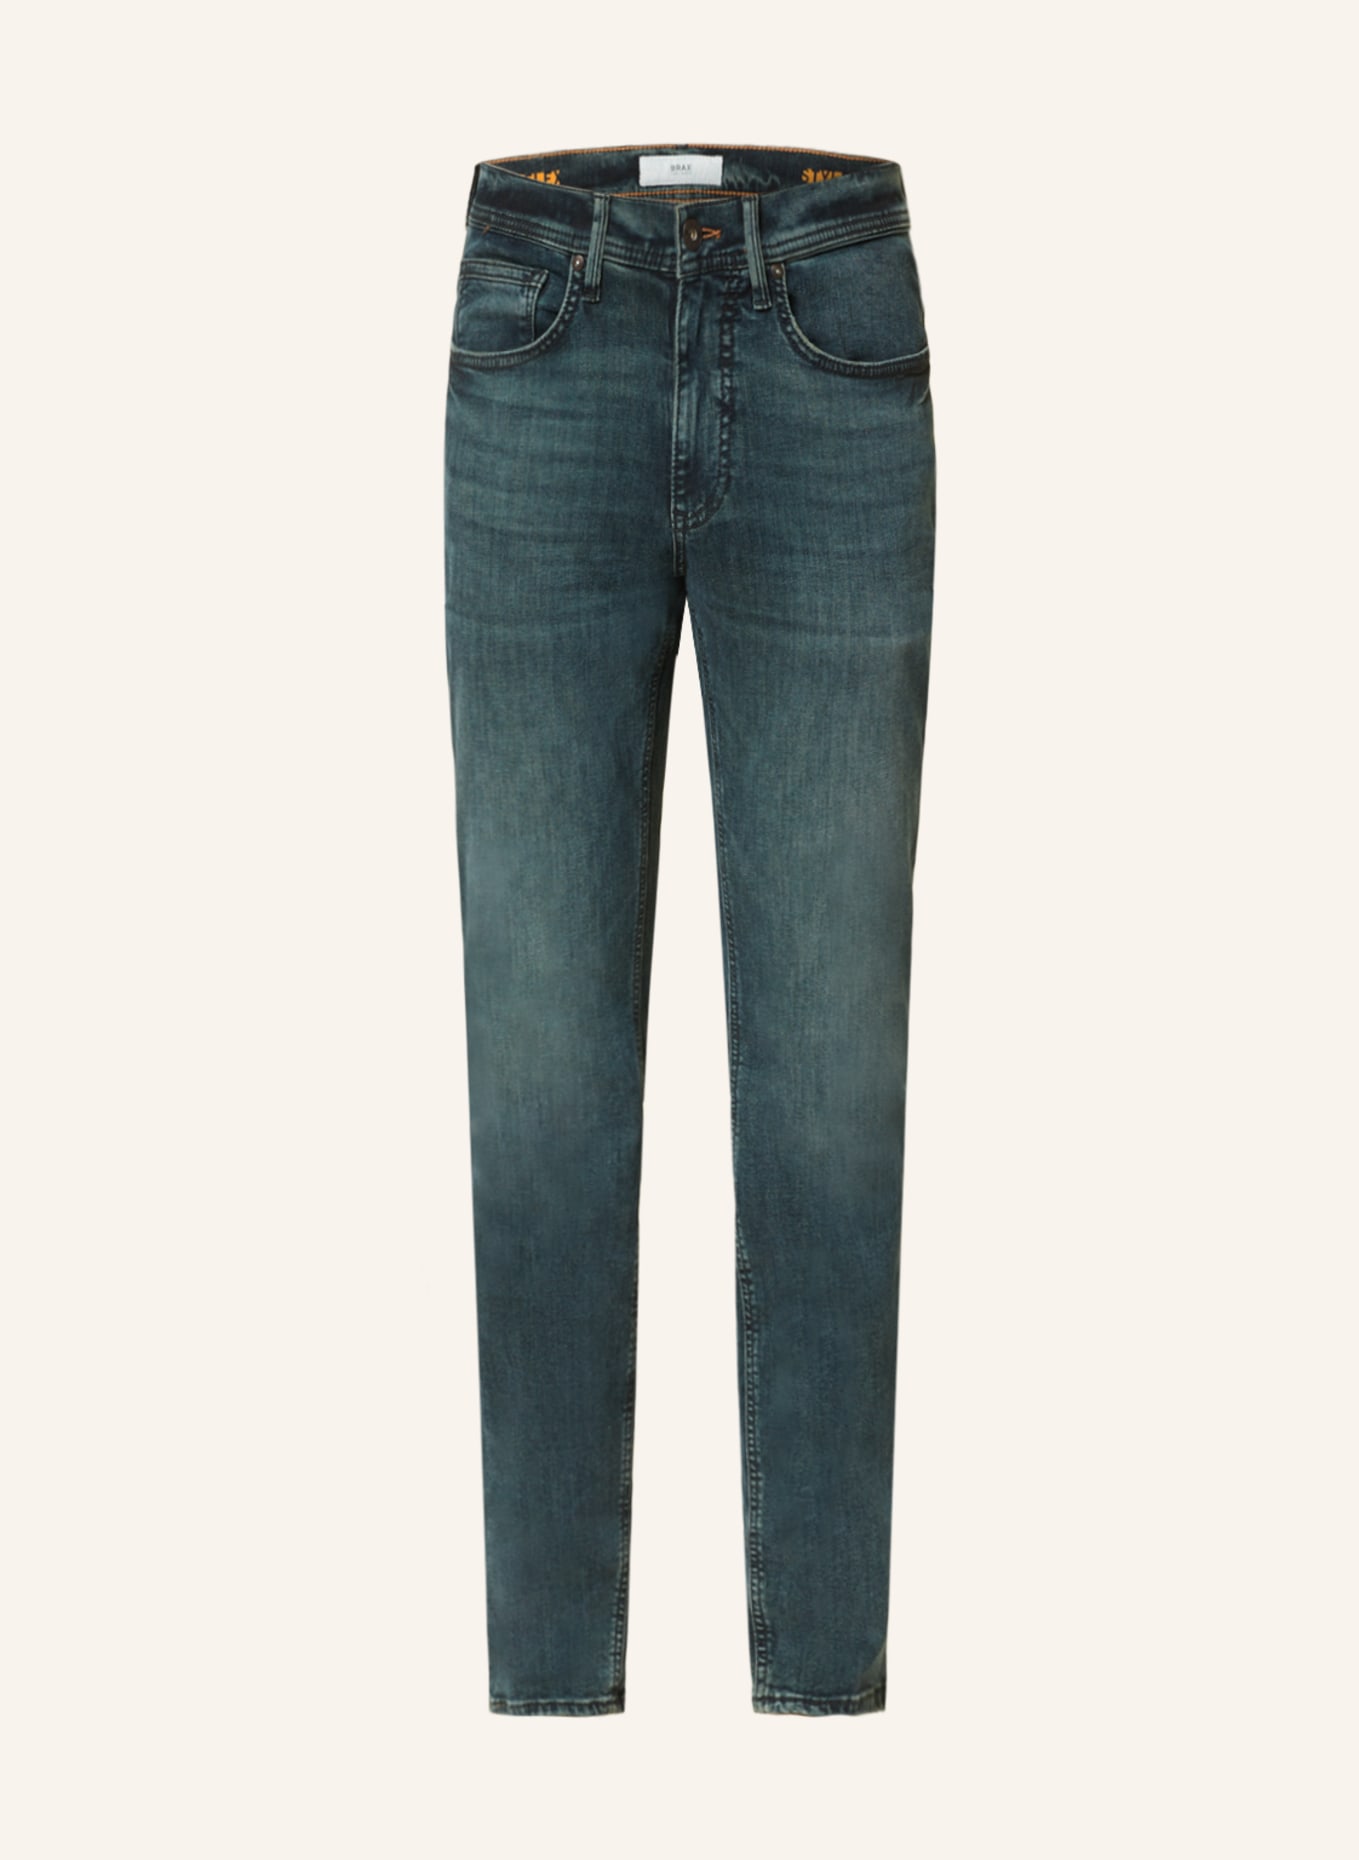 BRAX Jeans CHRIS Slim Fit, Farbe: 13 FOREST BLUE USED (Bild 1)